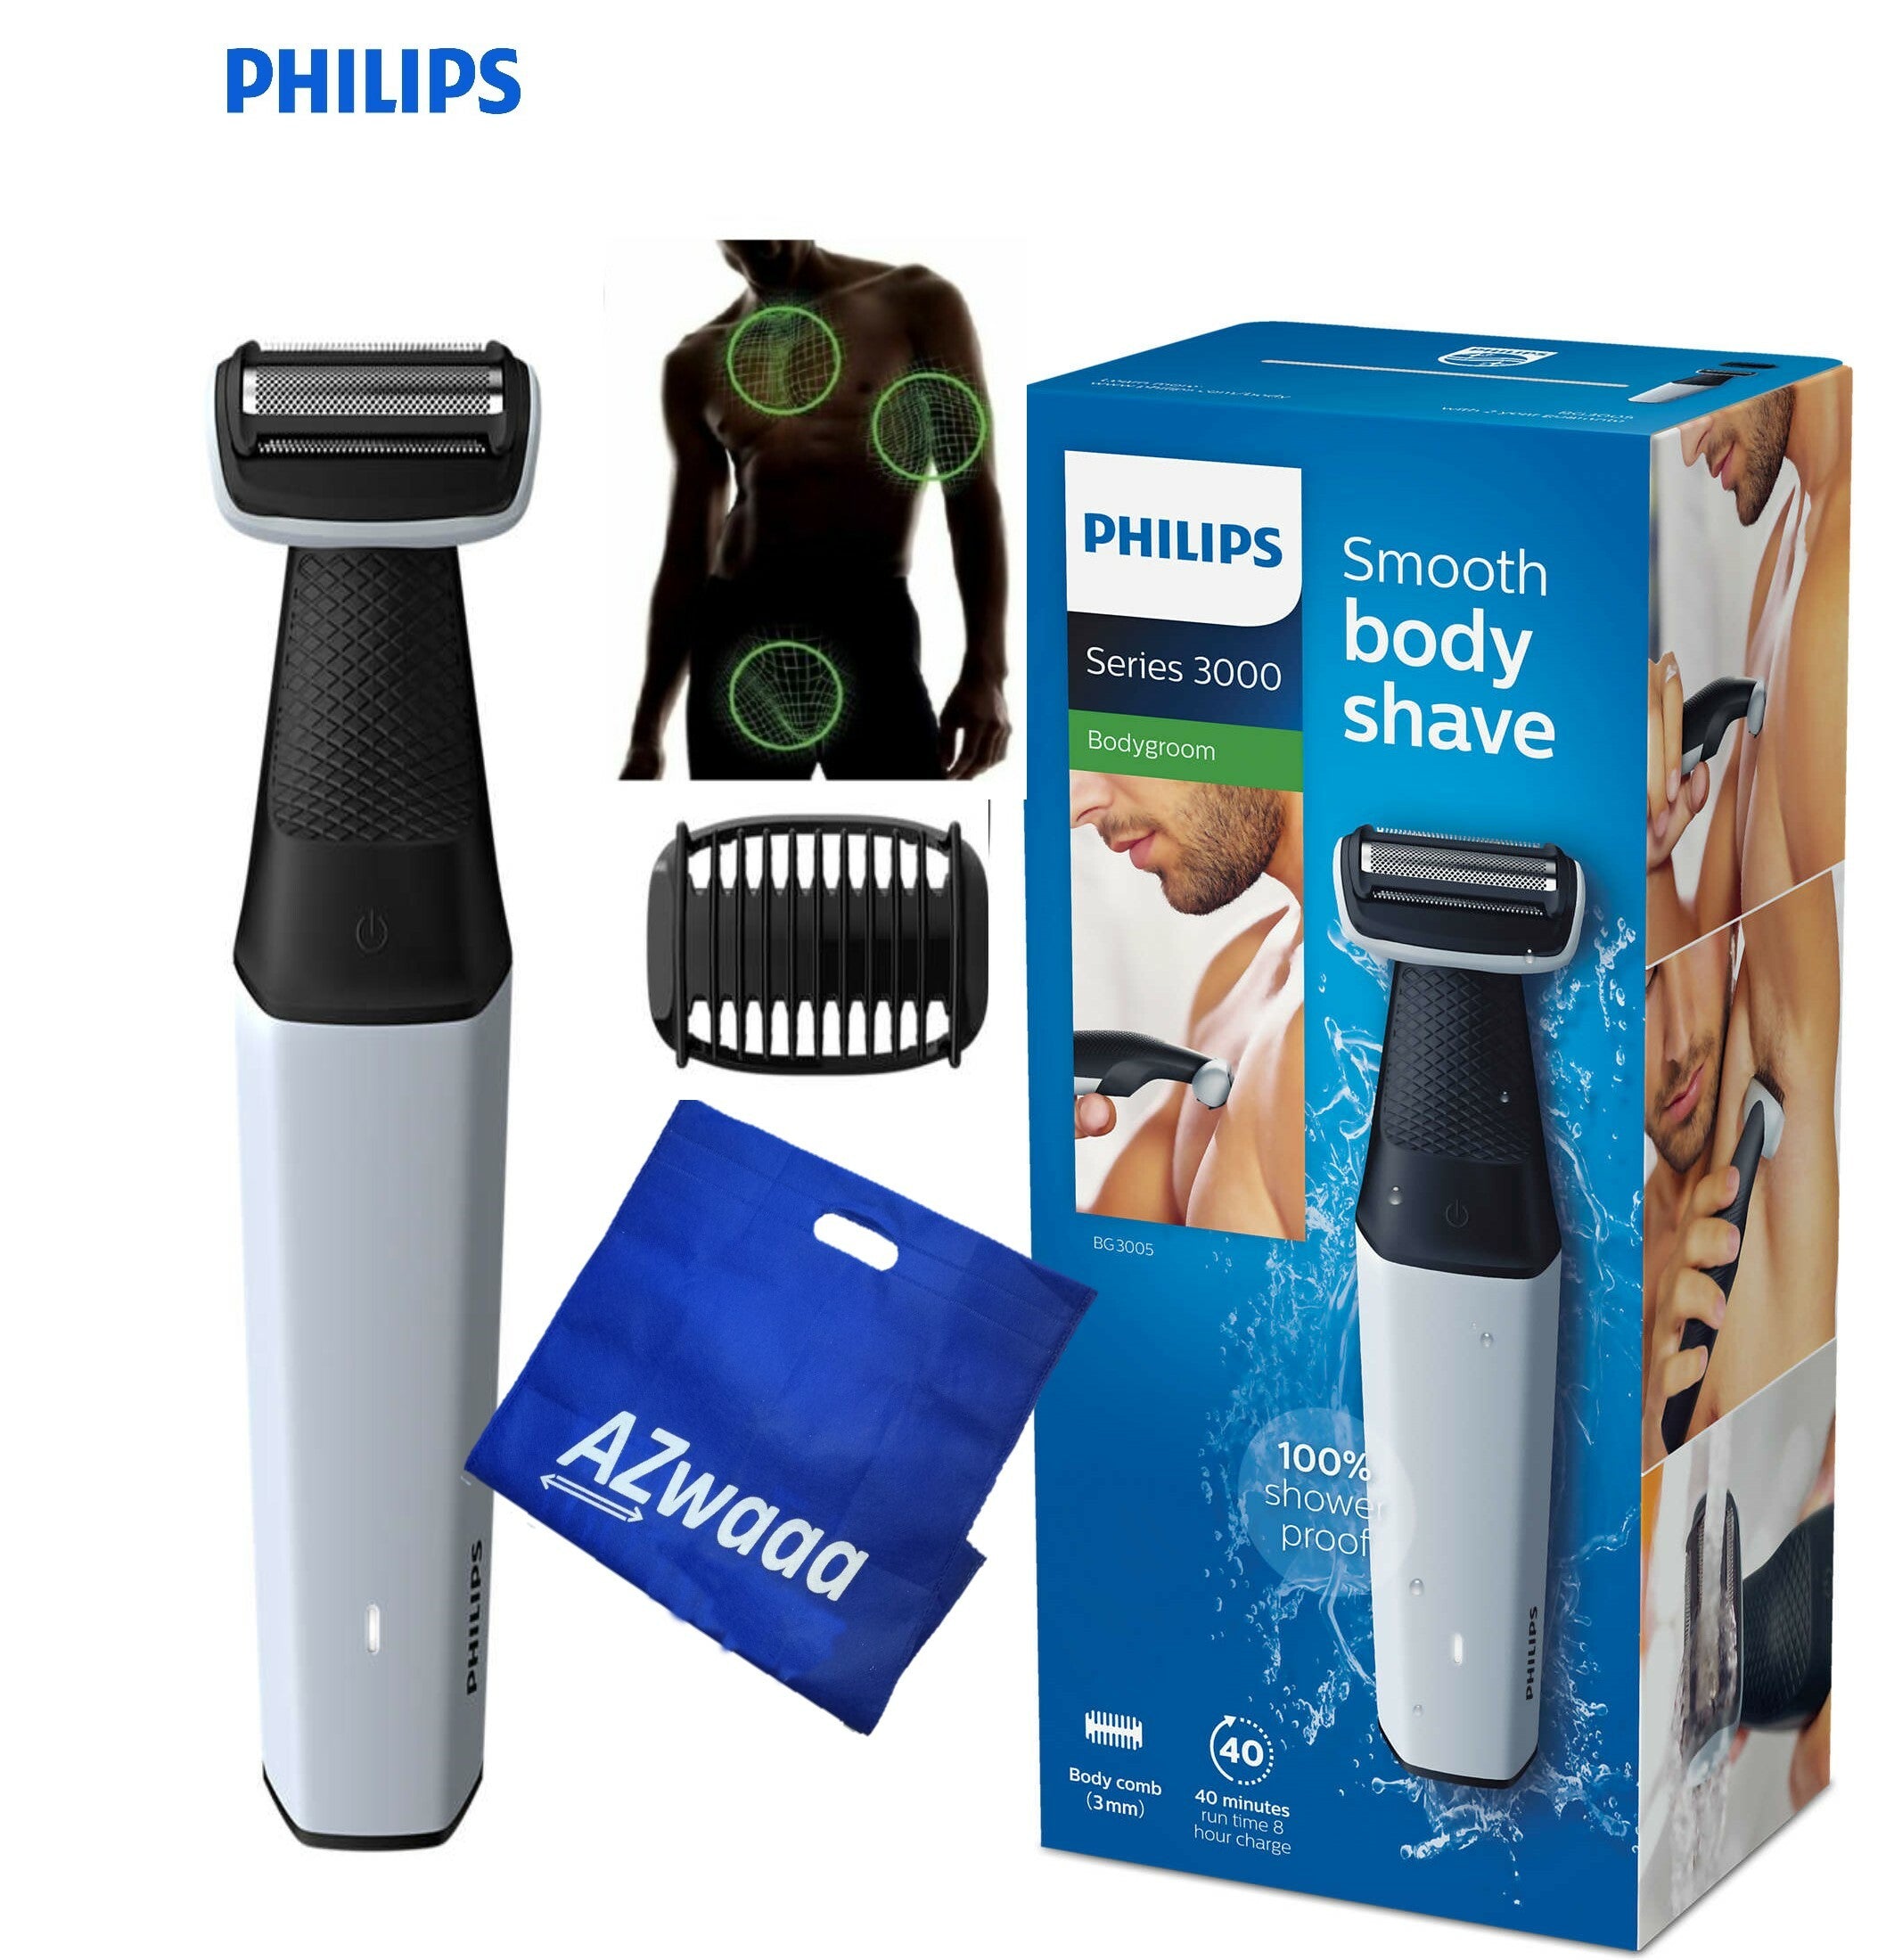 Philips | BG 3005 | Body Groom  ماكينة العناية بالجسم استخدامها أثناء الاستحمام